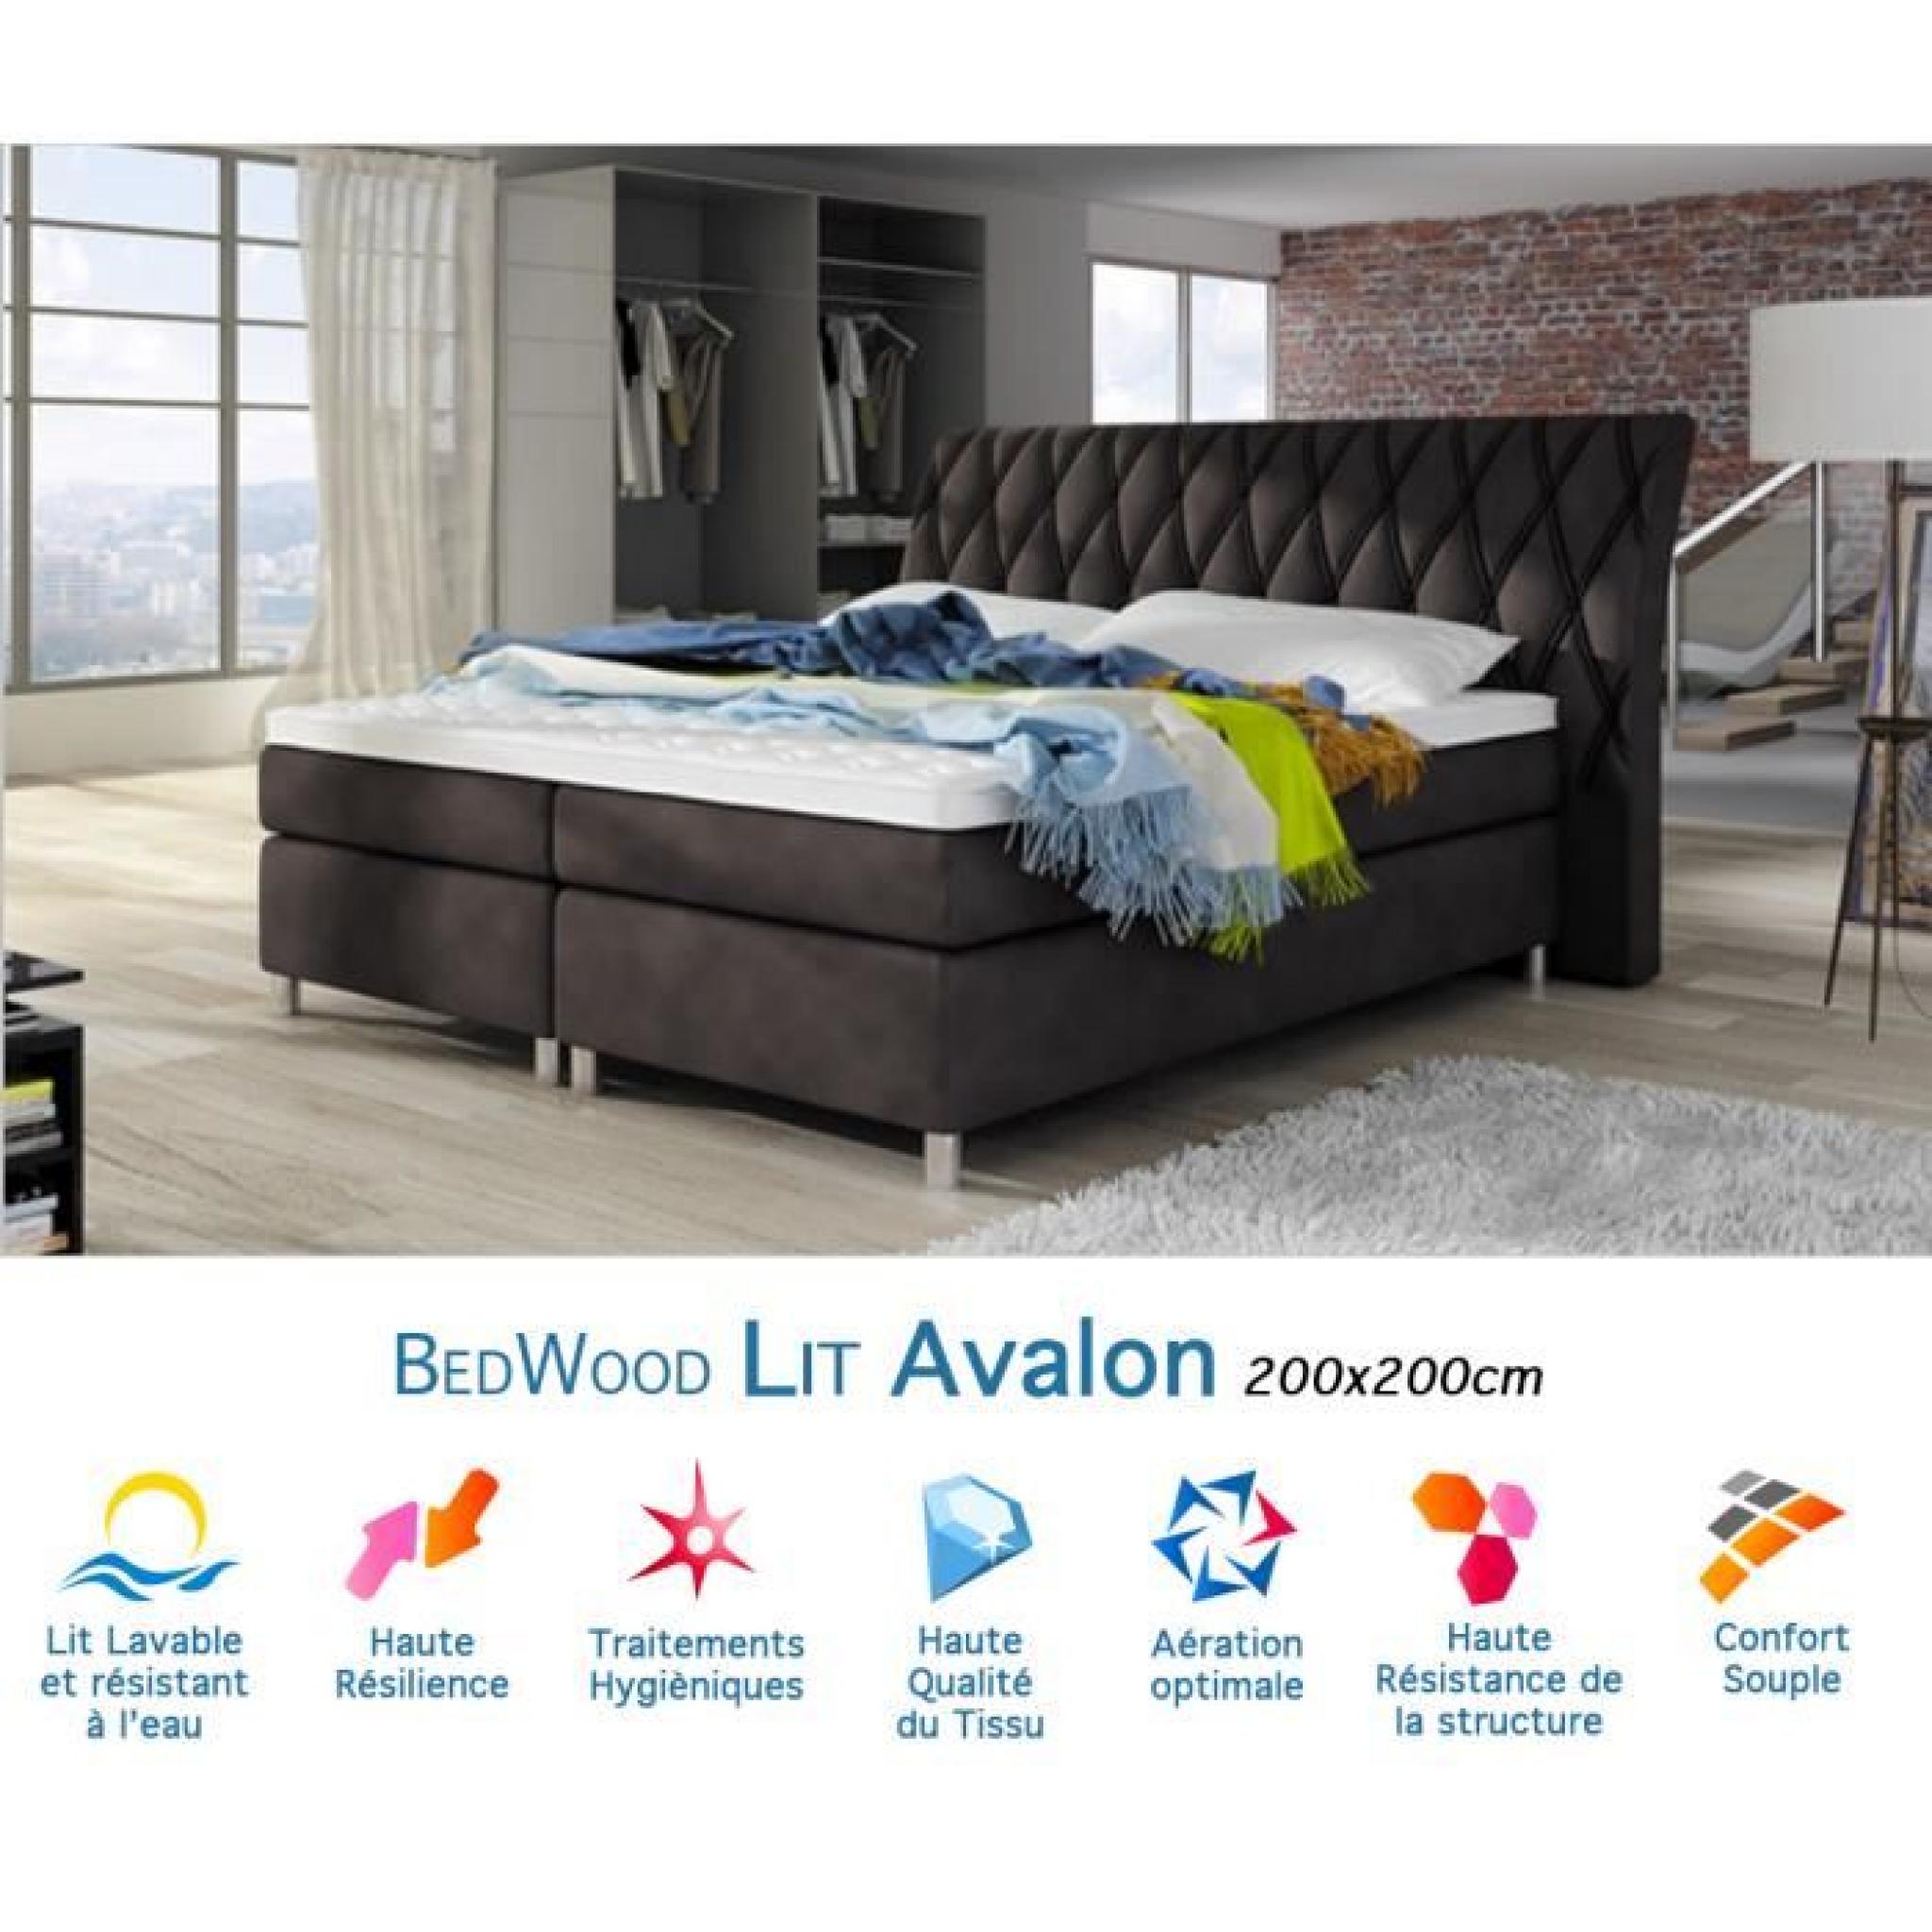 Lit Design Bedwood Avalon 200x200cm